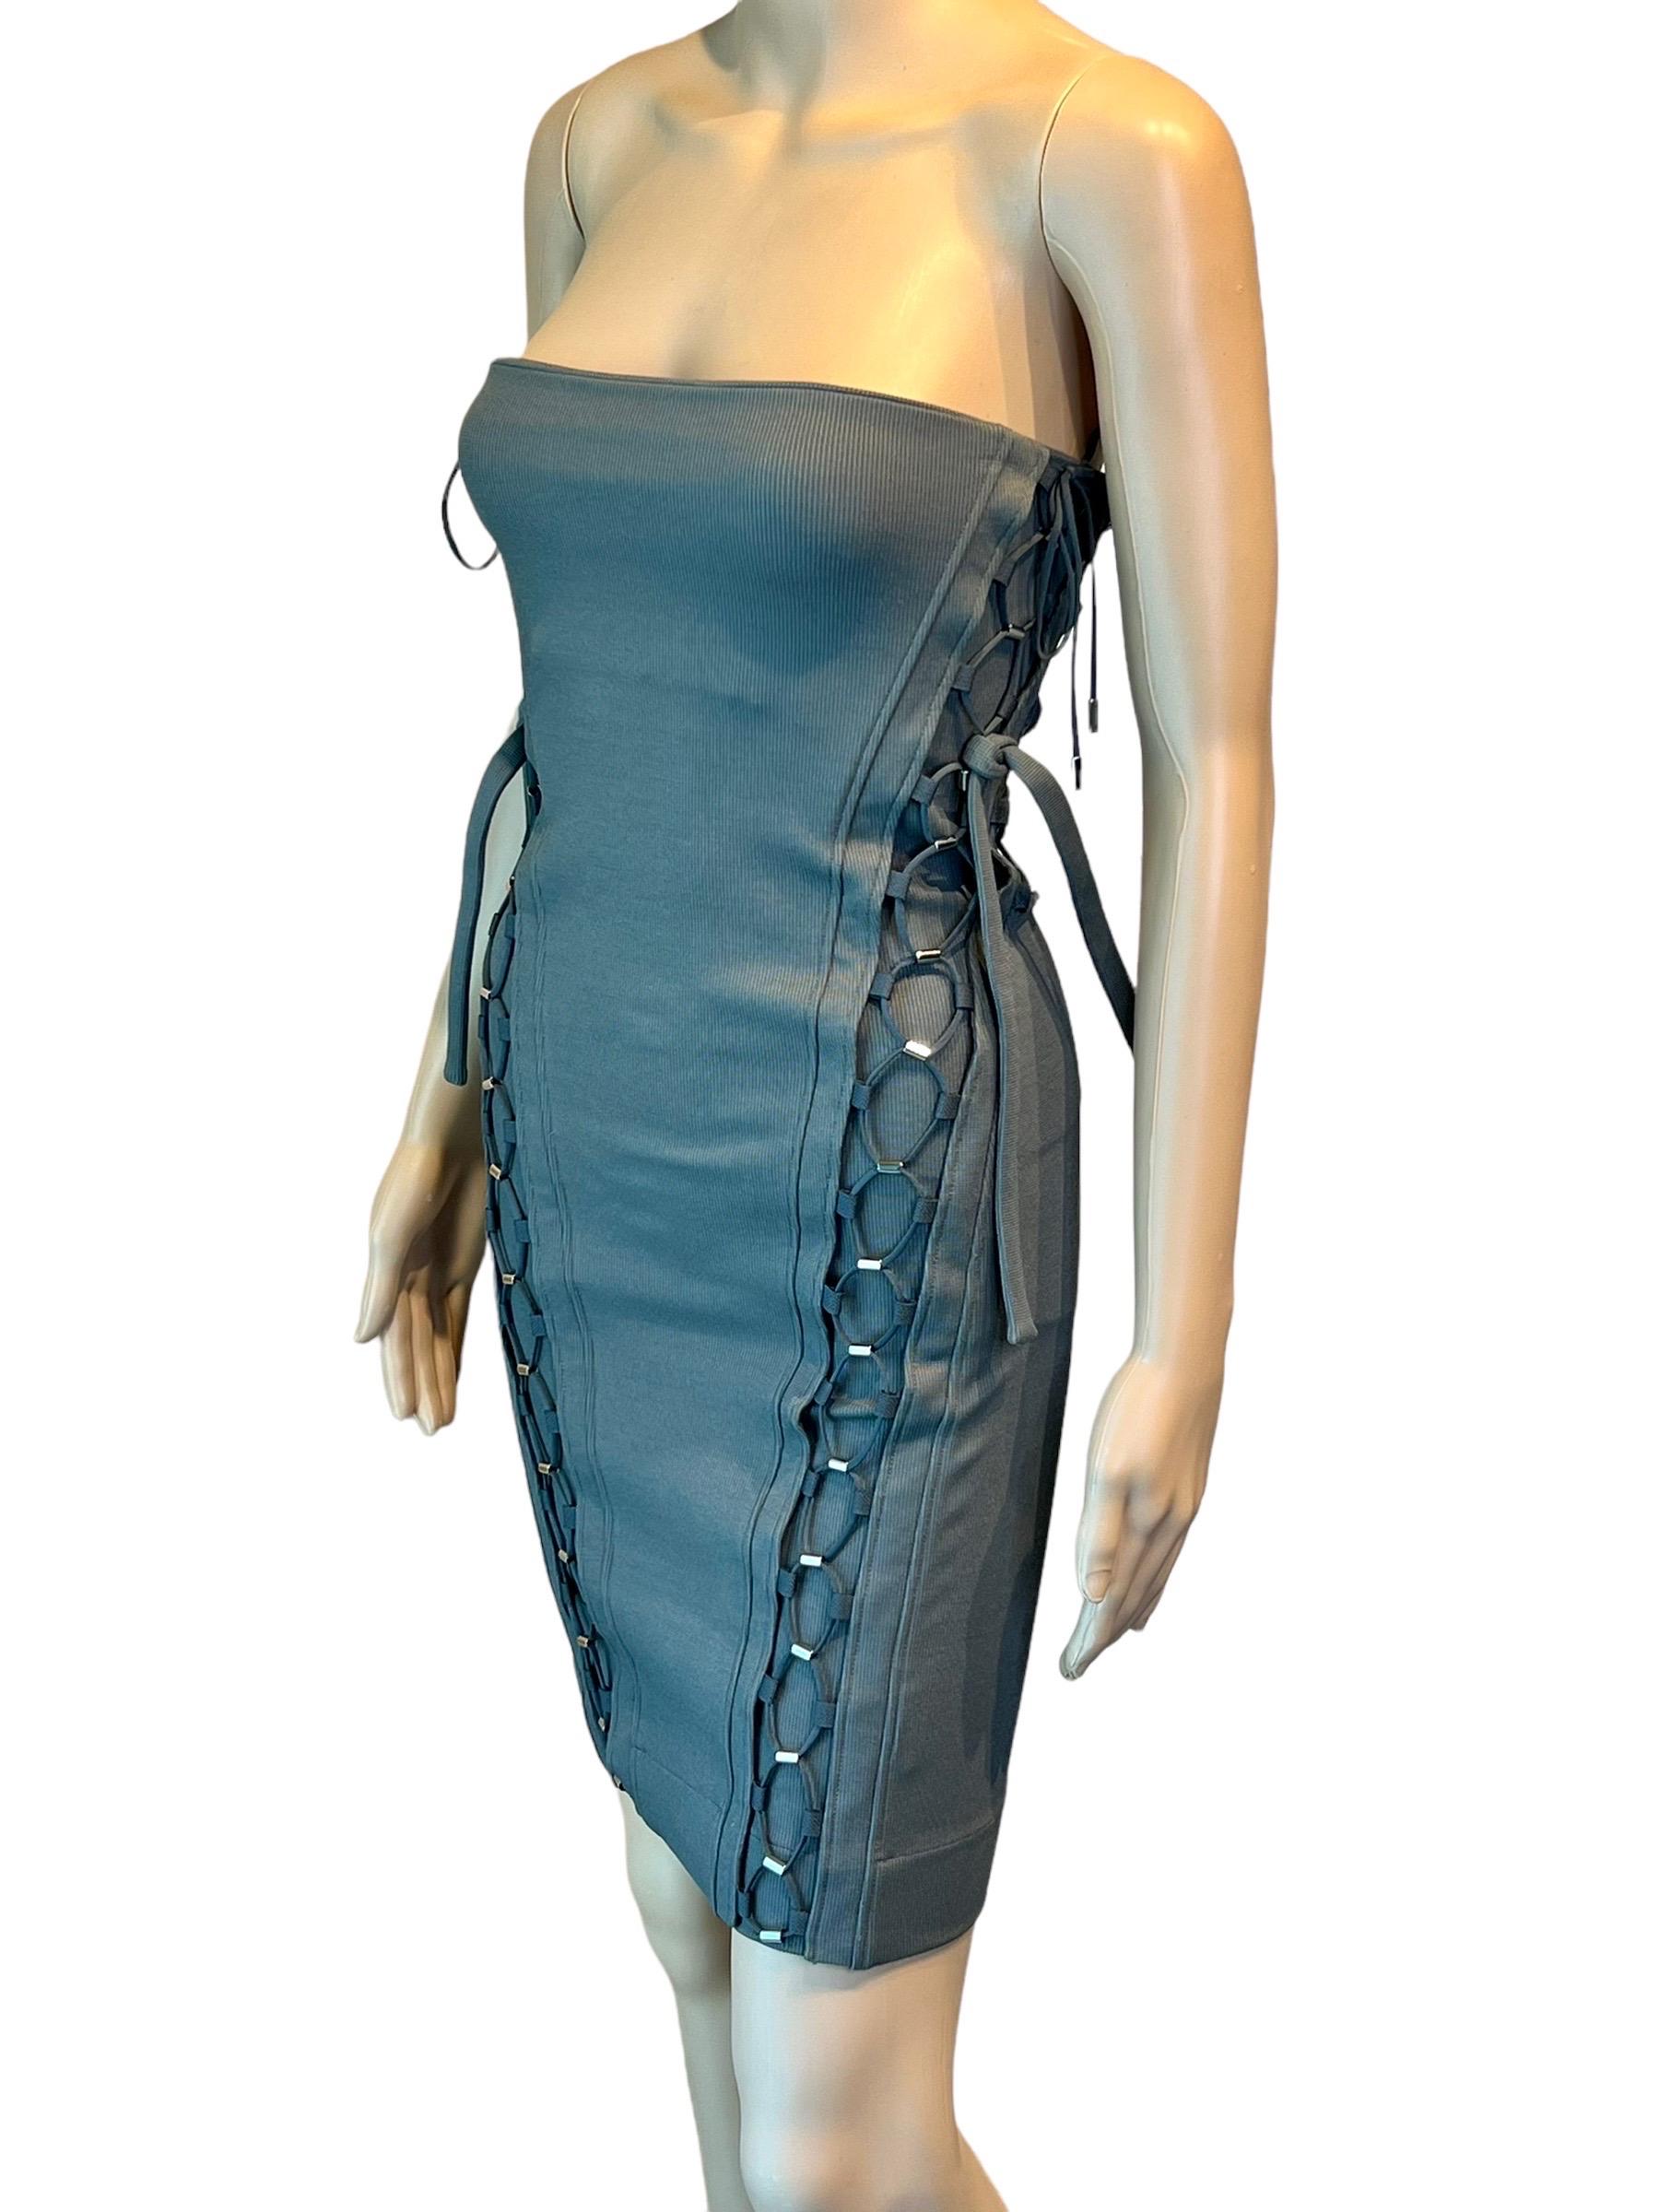 Gucci S/S 2010 Unworn Bodycon Lace Up Bandage Grey Mini Dress For Sale 2